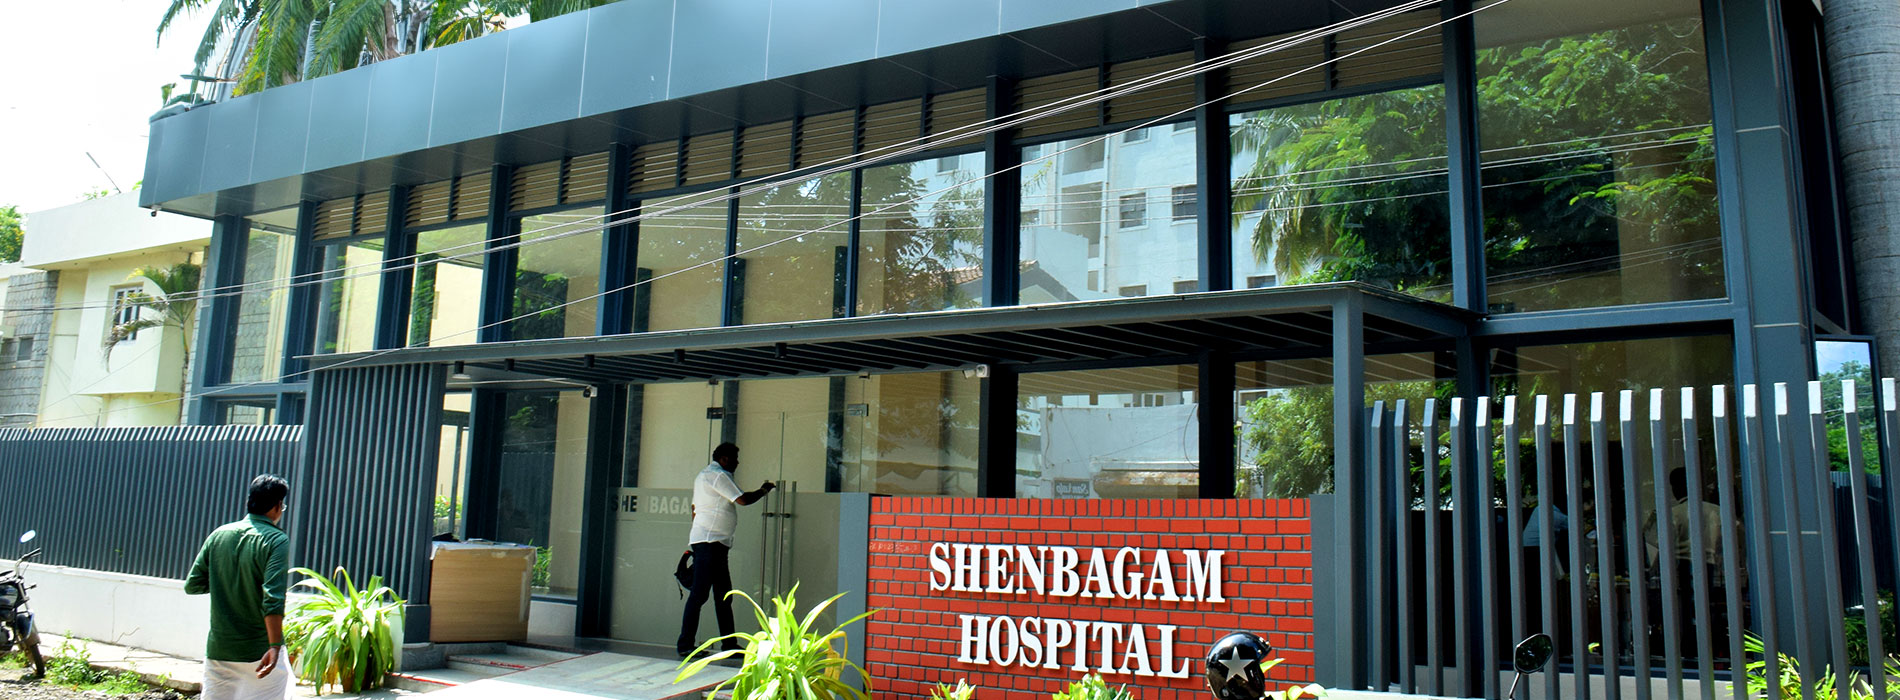 Shenbagam Hospital